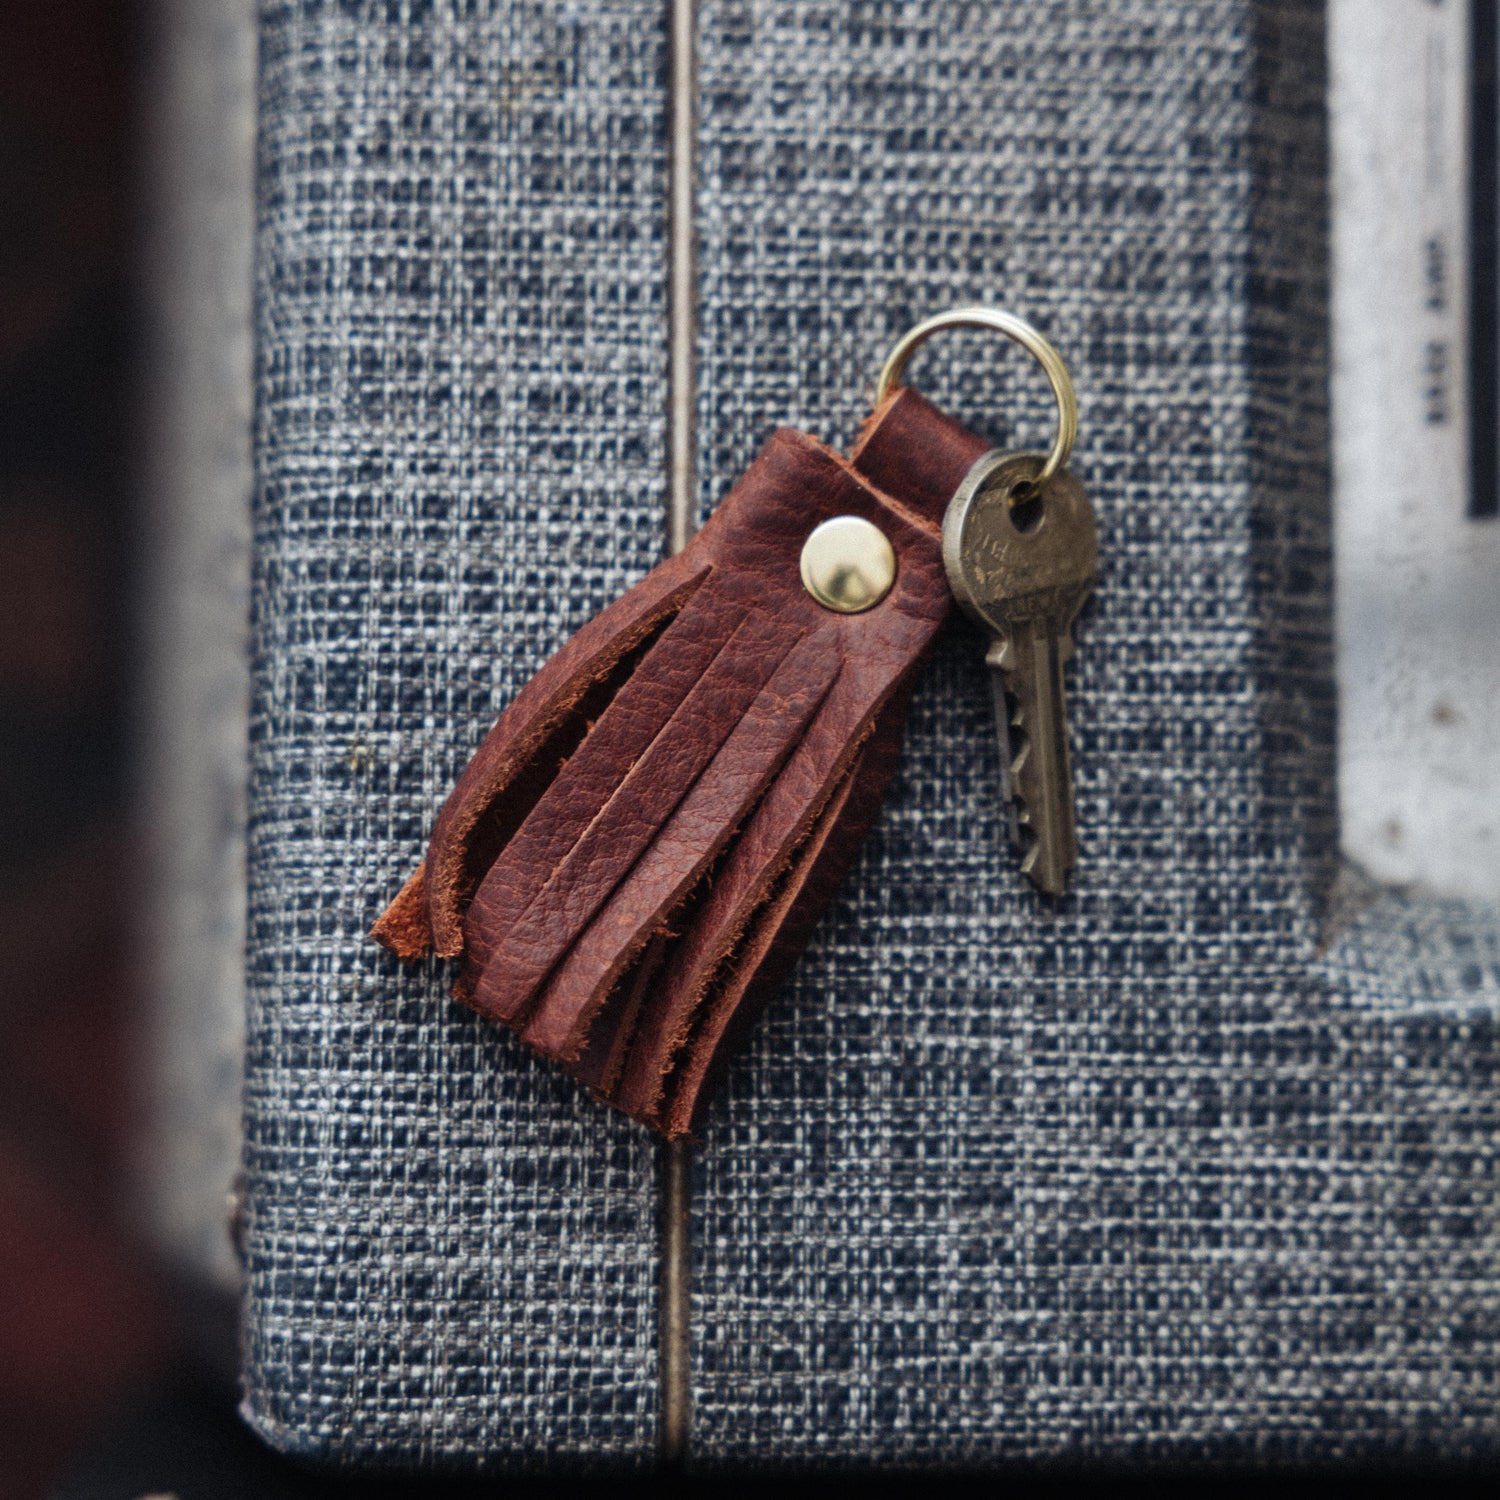 Amethyst Tassel Keychain- leather tassel keychain - KMM &amp; Co.